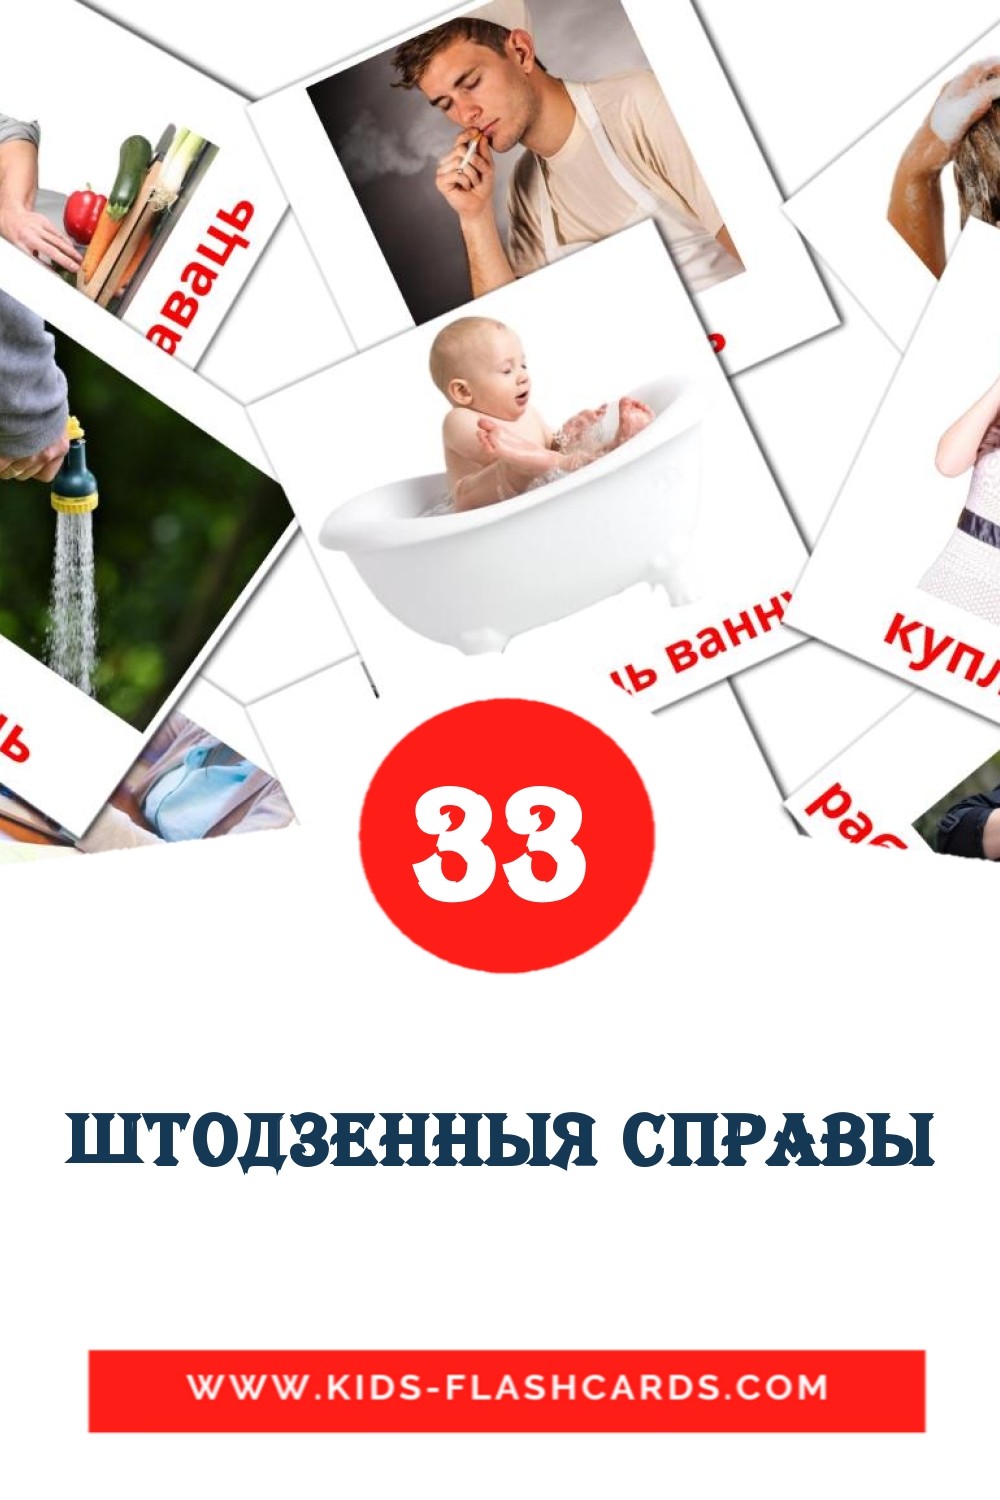 33 carte illustrate di штодзенныя справы per la scuola materna in bielorusso